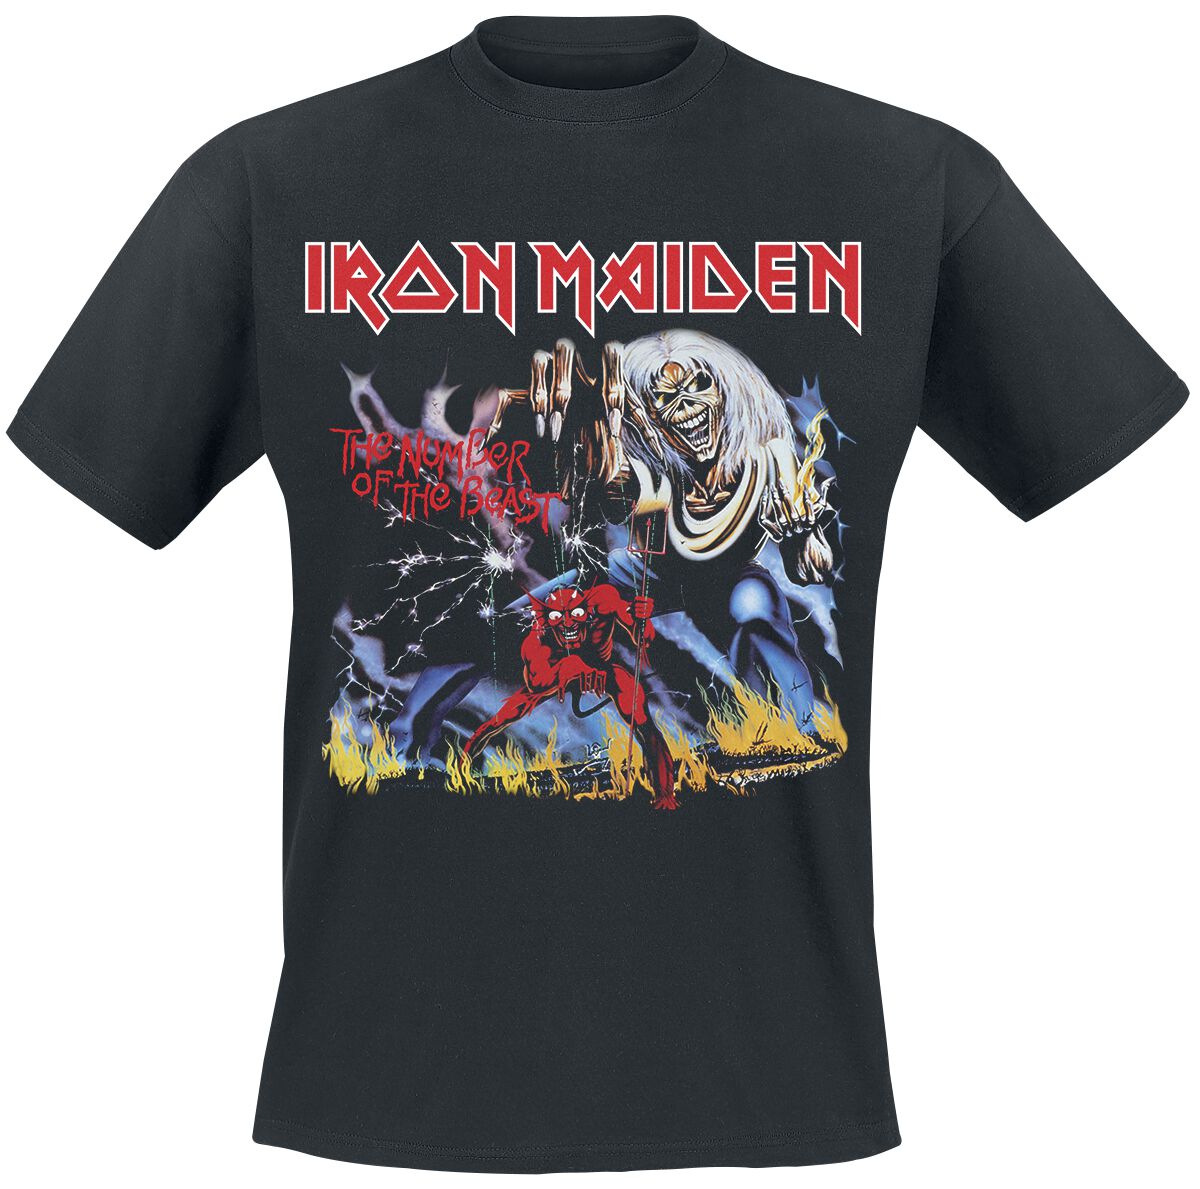 Iron Maiden Stranger Number Of The Beast T-Shirt schwarz in L